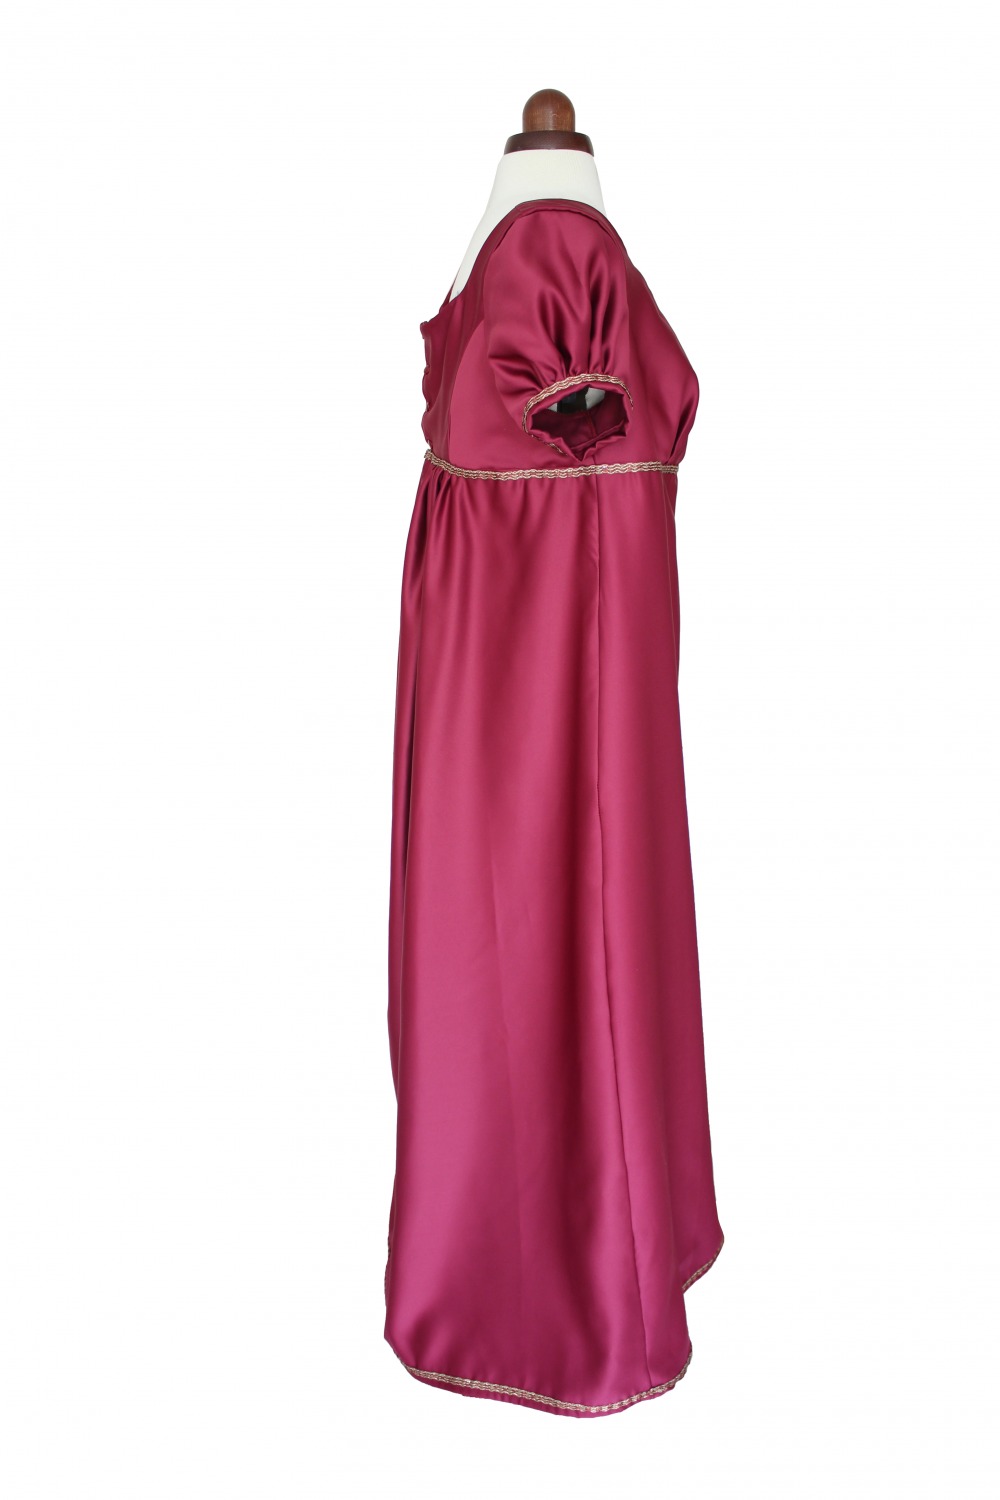 Ladies 18th 19th Century Regency Jane Austen Costume Evening Gown Size 16 - 18 Image